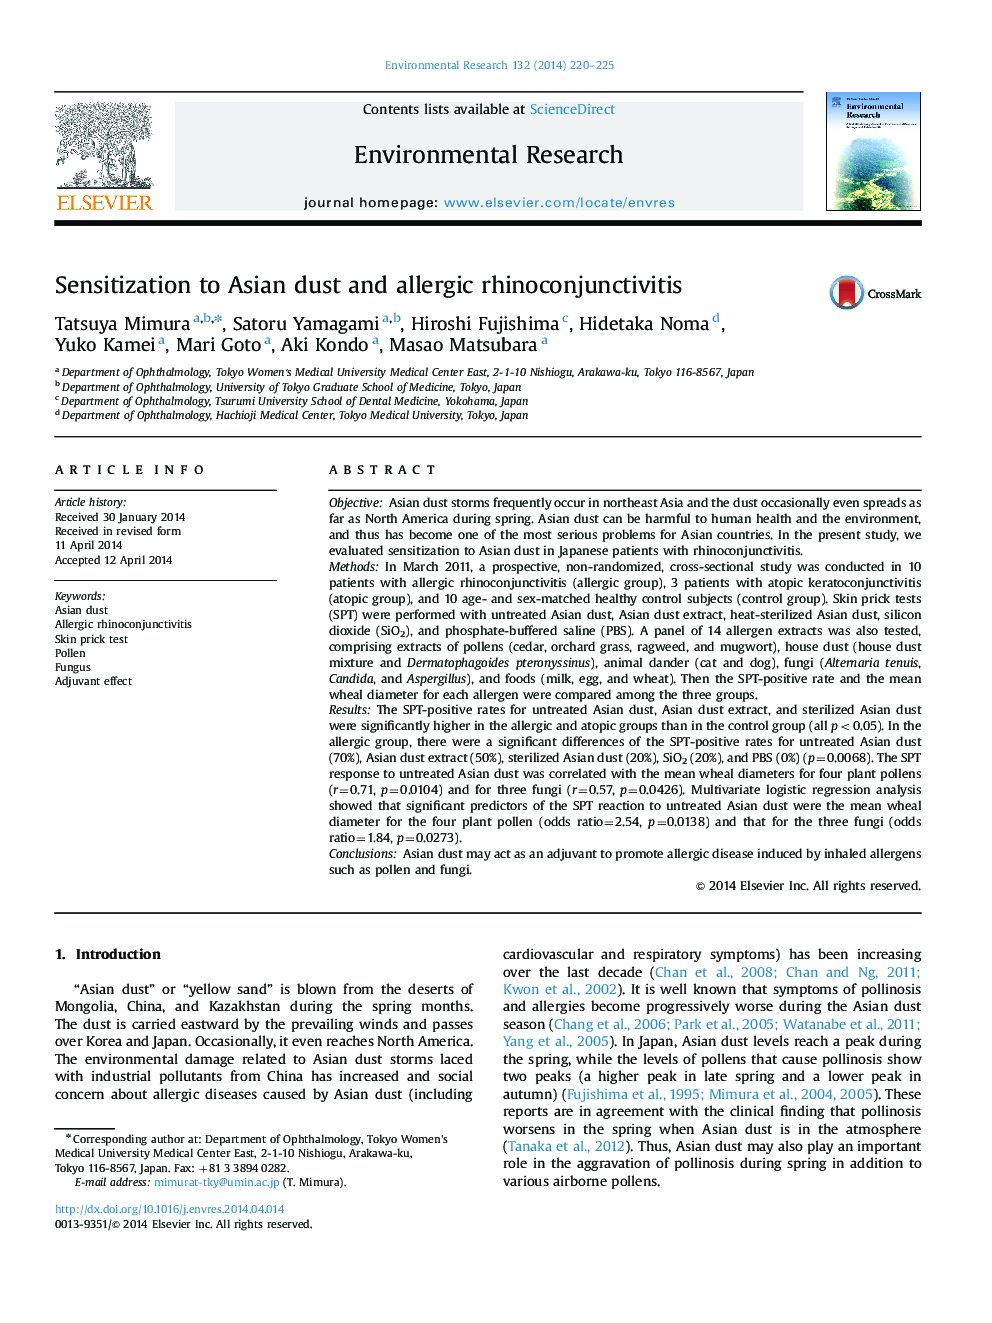 Sensitization to Asian dust and allergic rhinoconjunctivitis